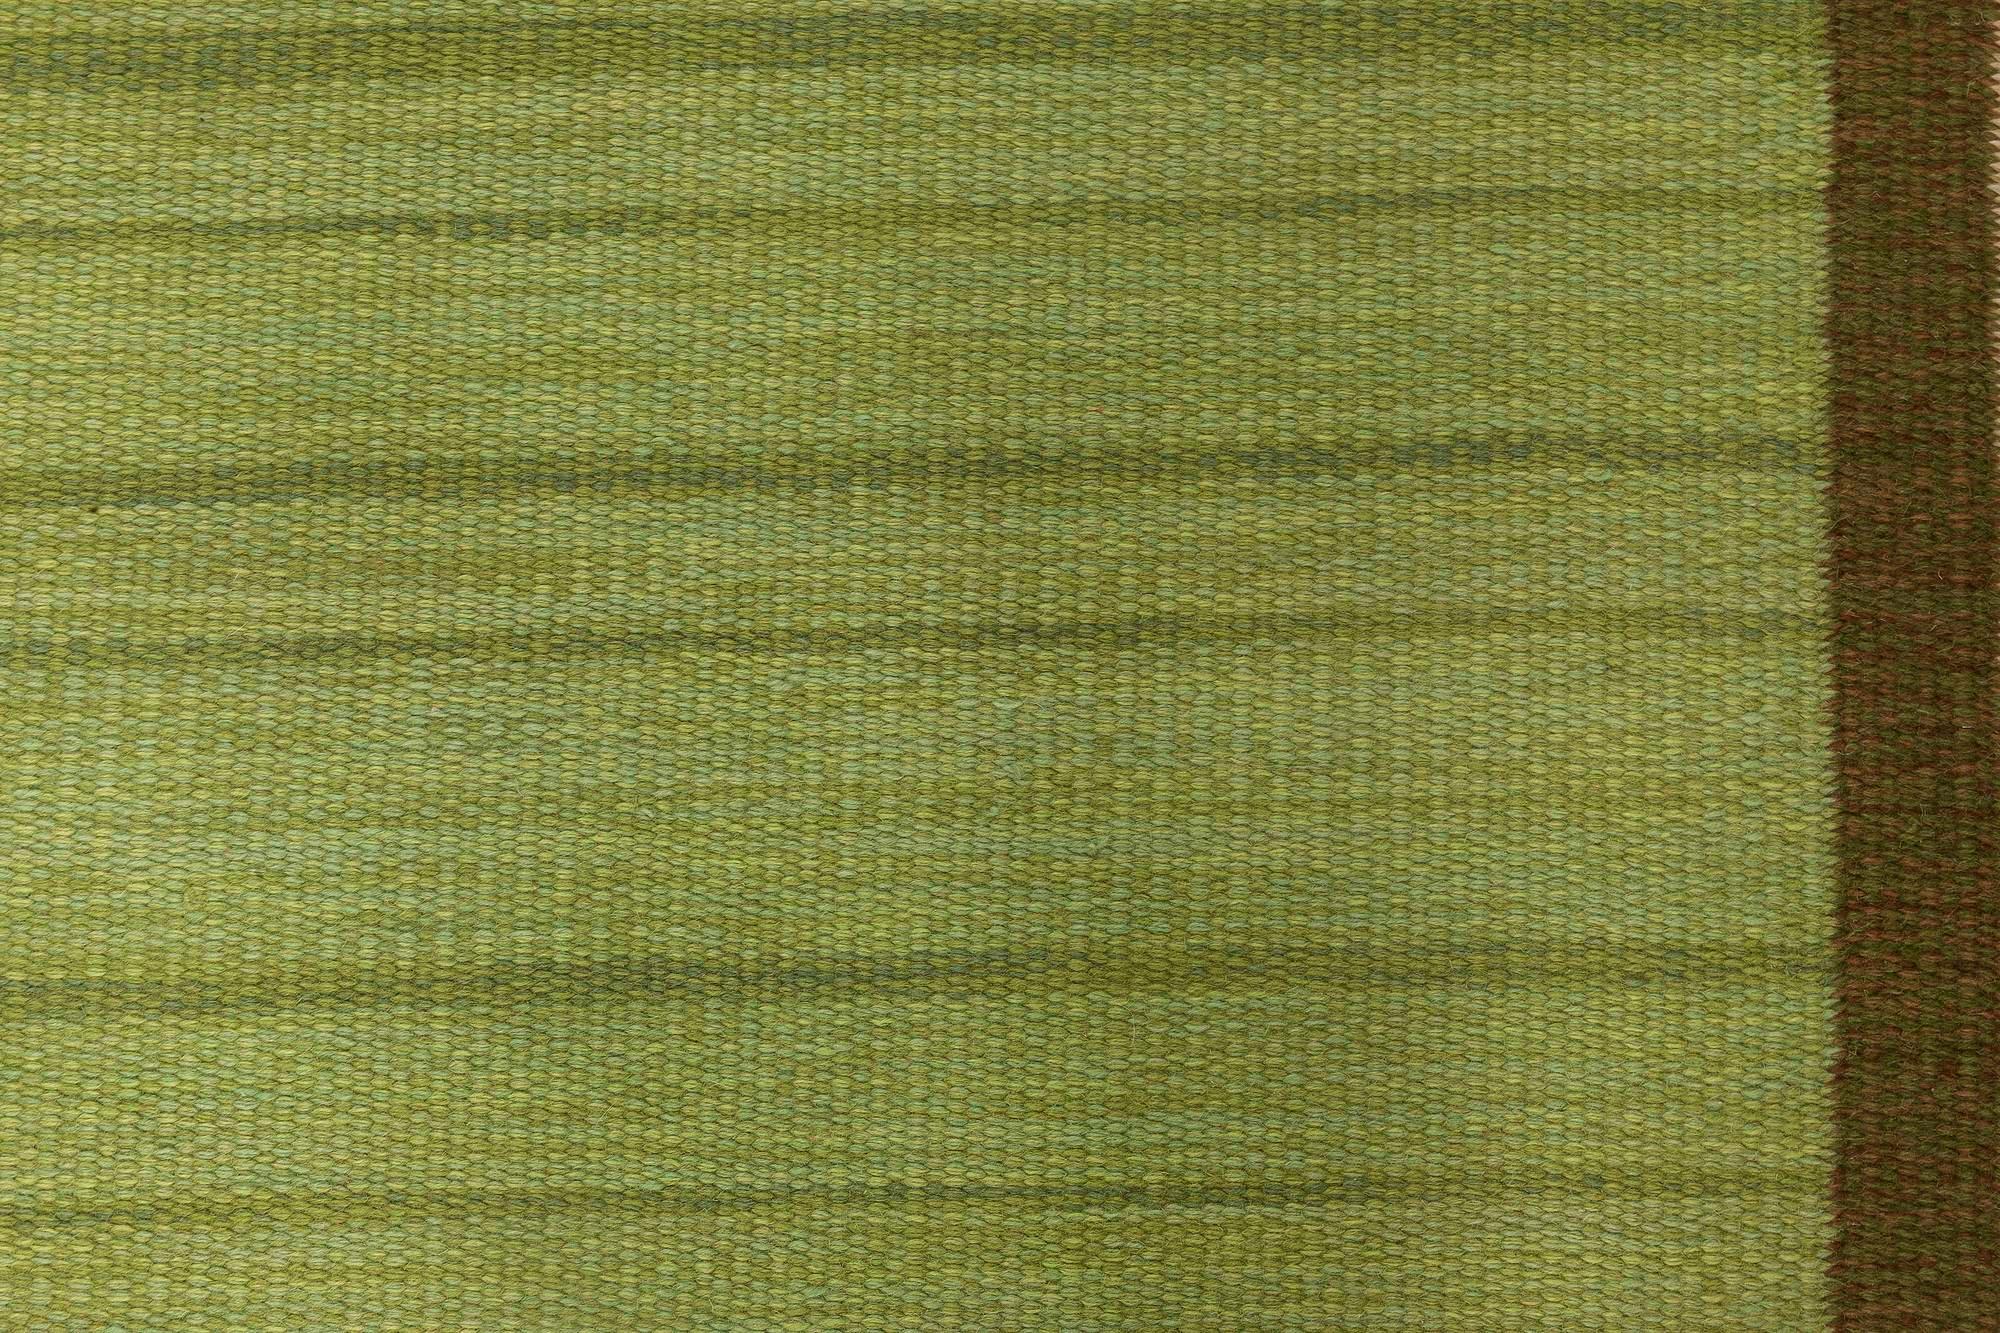 Mid-20th century geometric green yellow Swedish flat-weave rug
Size: 5'4